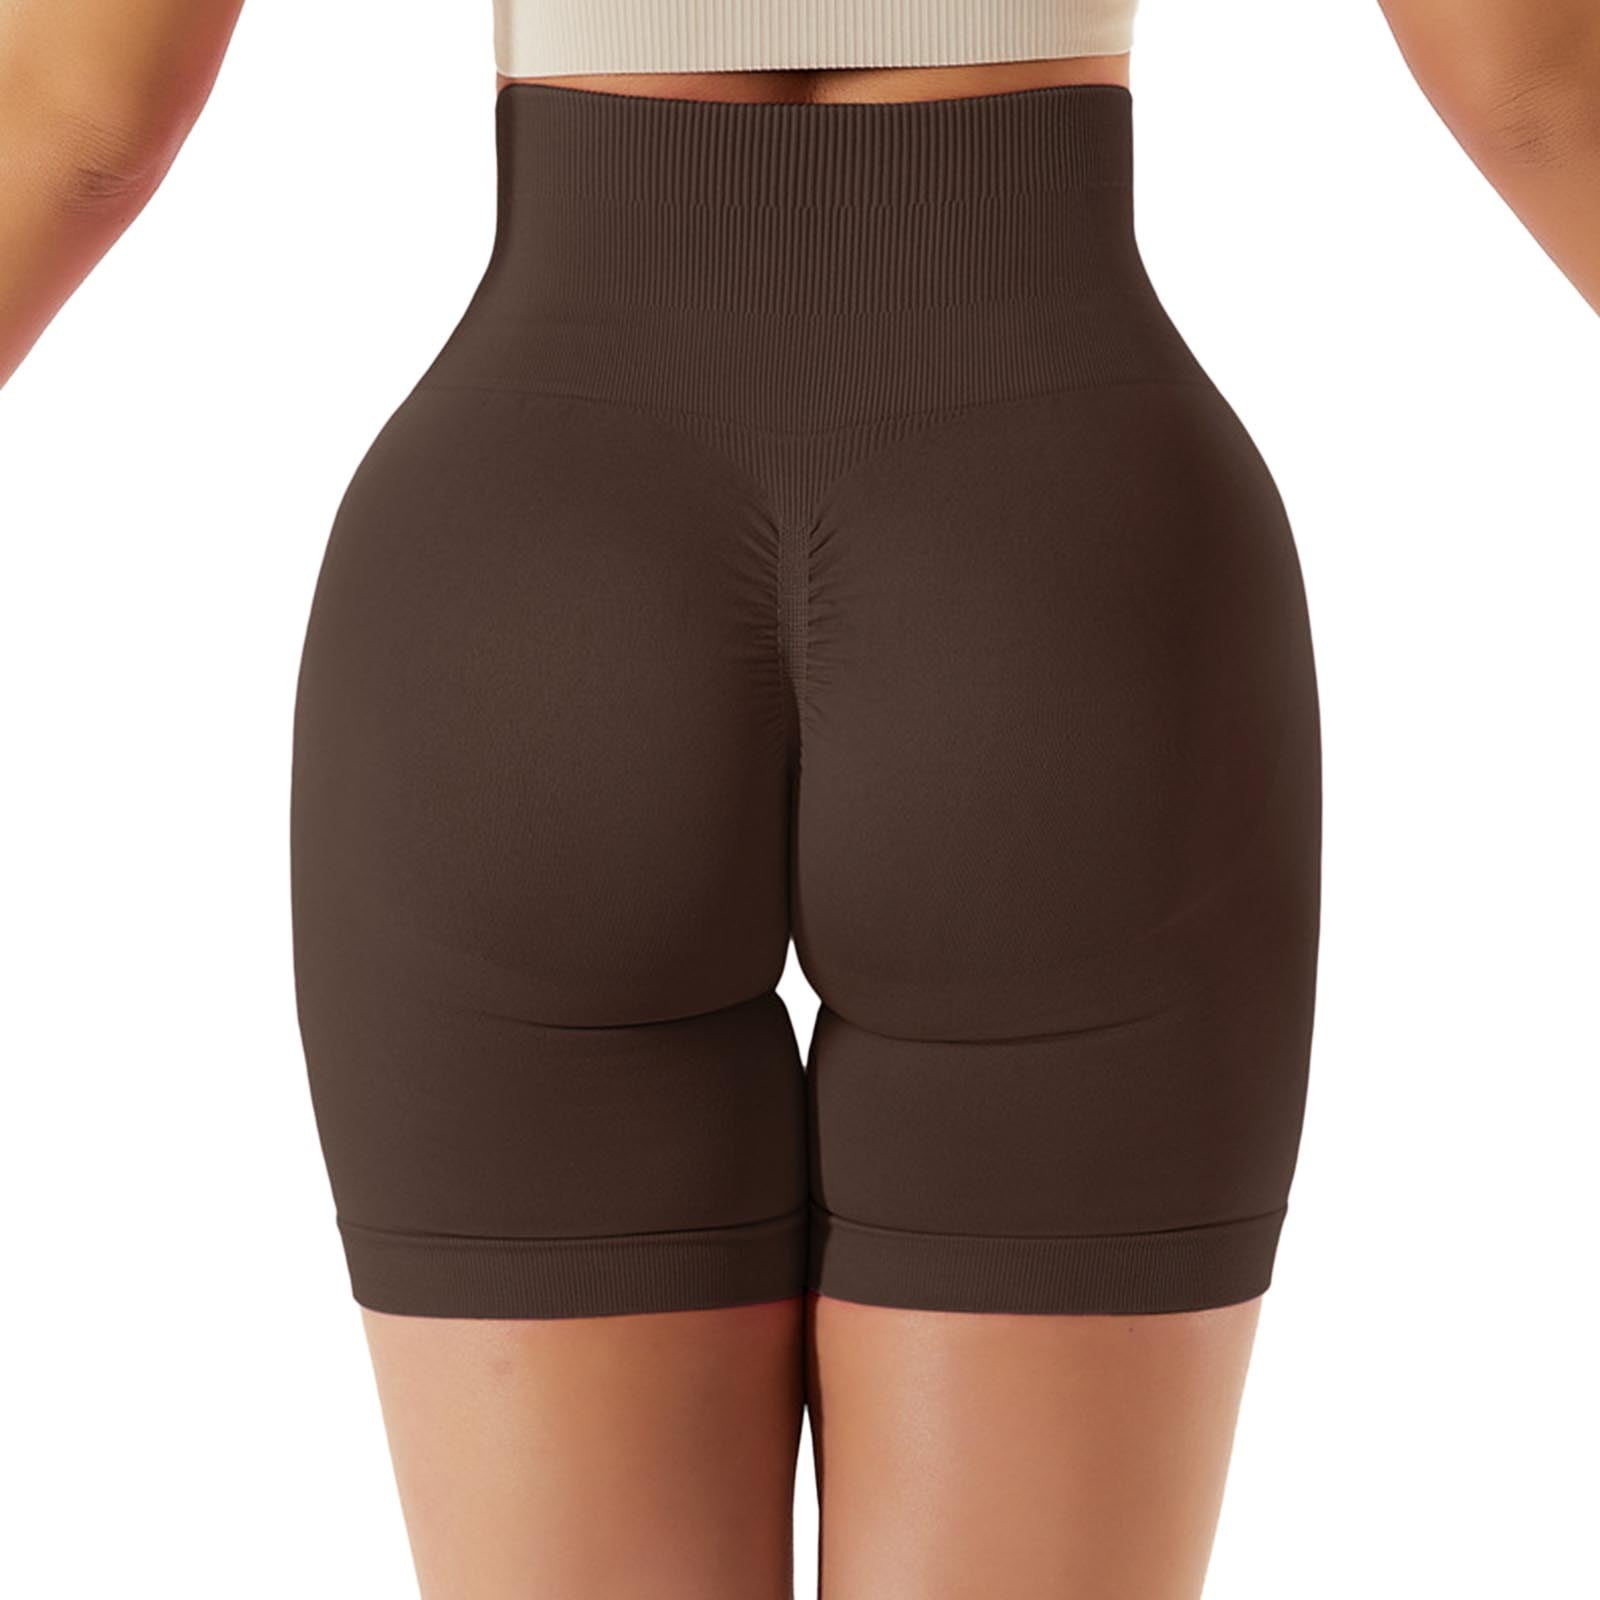 adviicd Short Pants For Women Casual Summer Yoga Pants Yoga Shorts